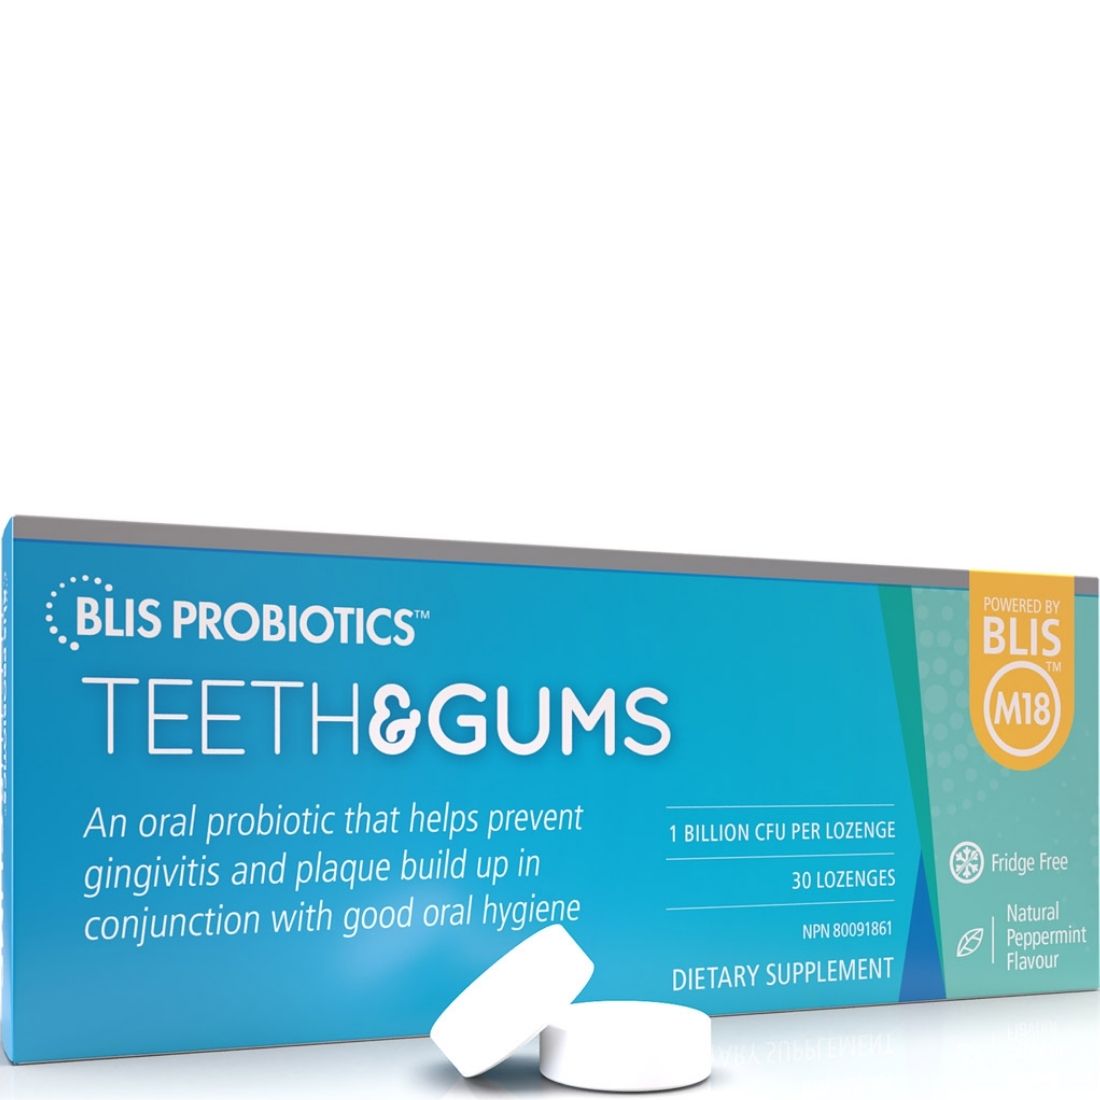 BLIS Probiotics TeethandGums with BLIS M18, 30 Lozenges